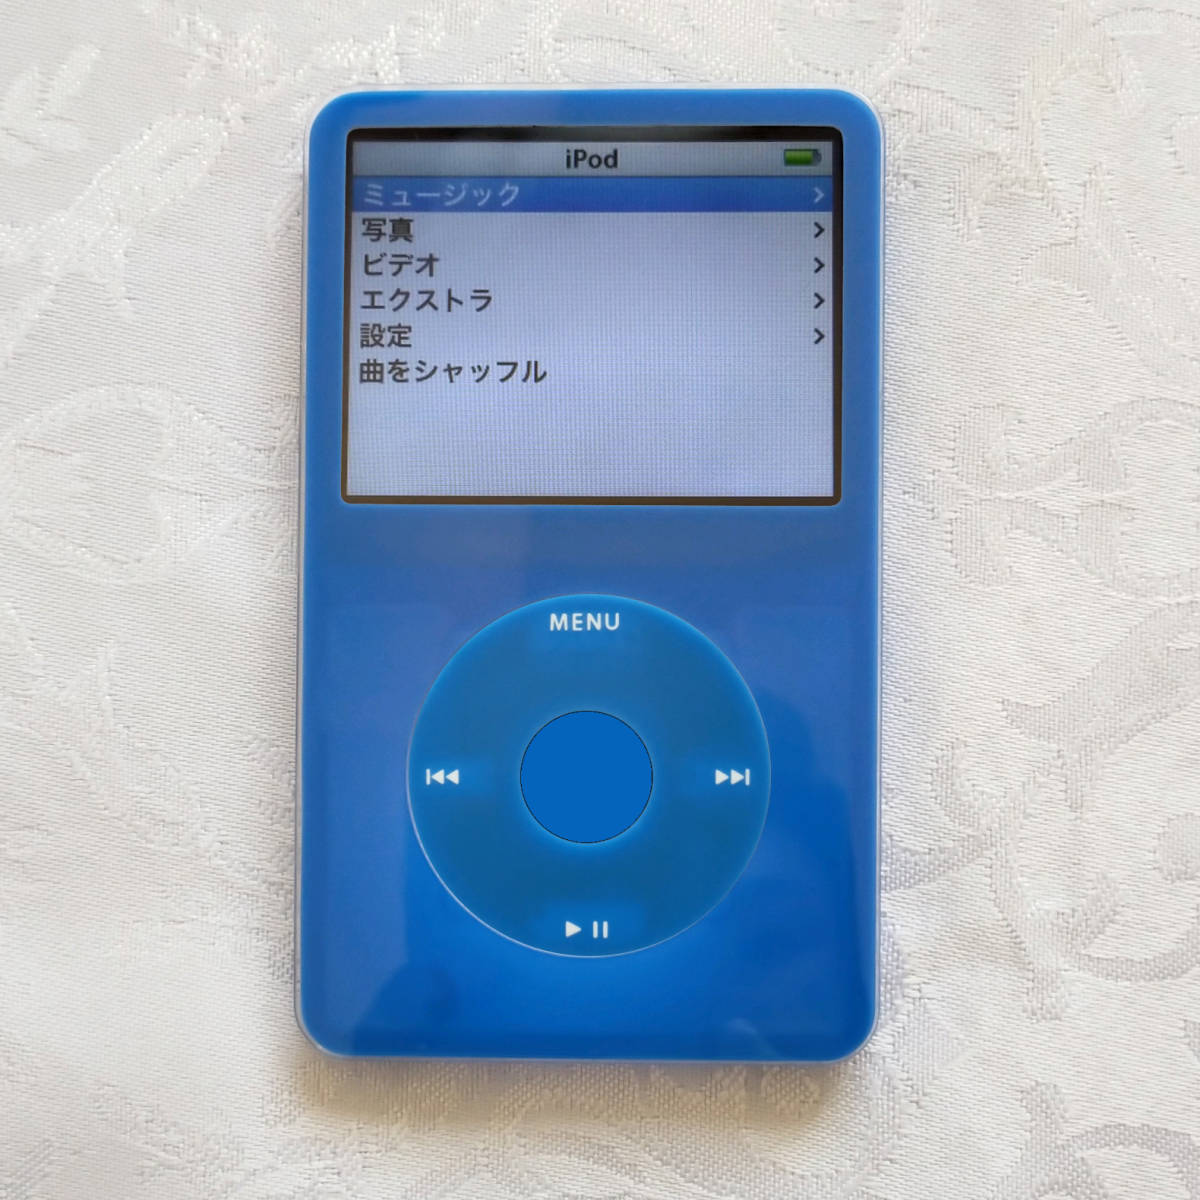 美品】【大容量化】iPod classic 第5世代 ブルーver 256GB!! A1136 ...